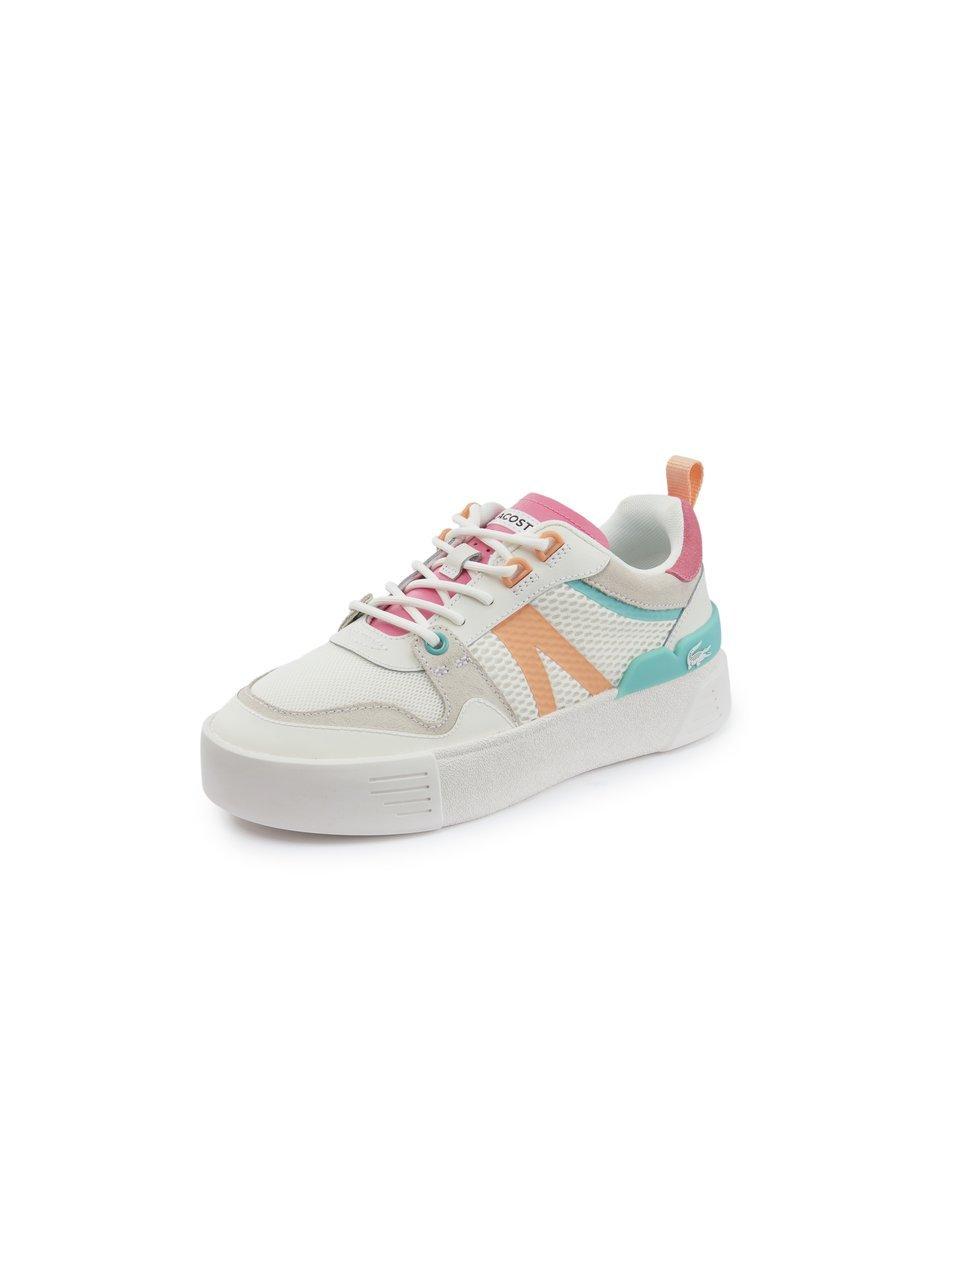 Lacoste L002 Dames Sneakers - Wit/Multicolour - Maat 39